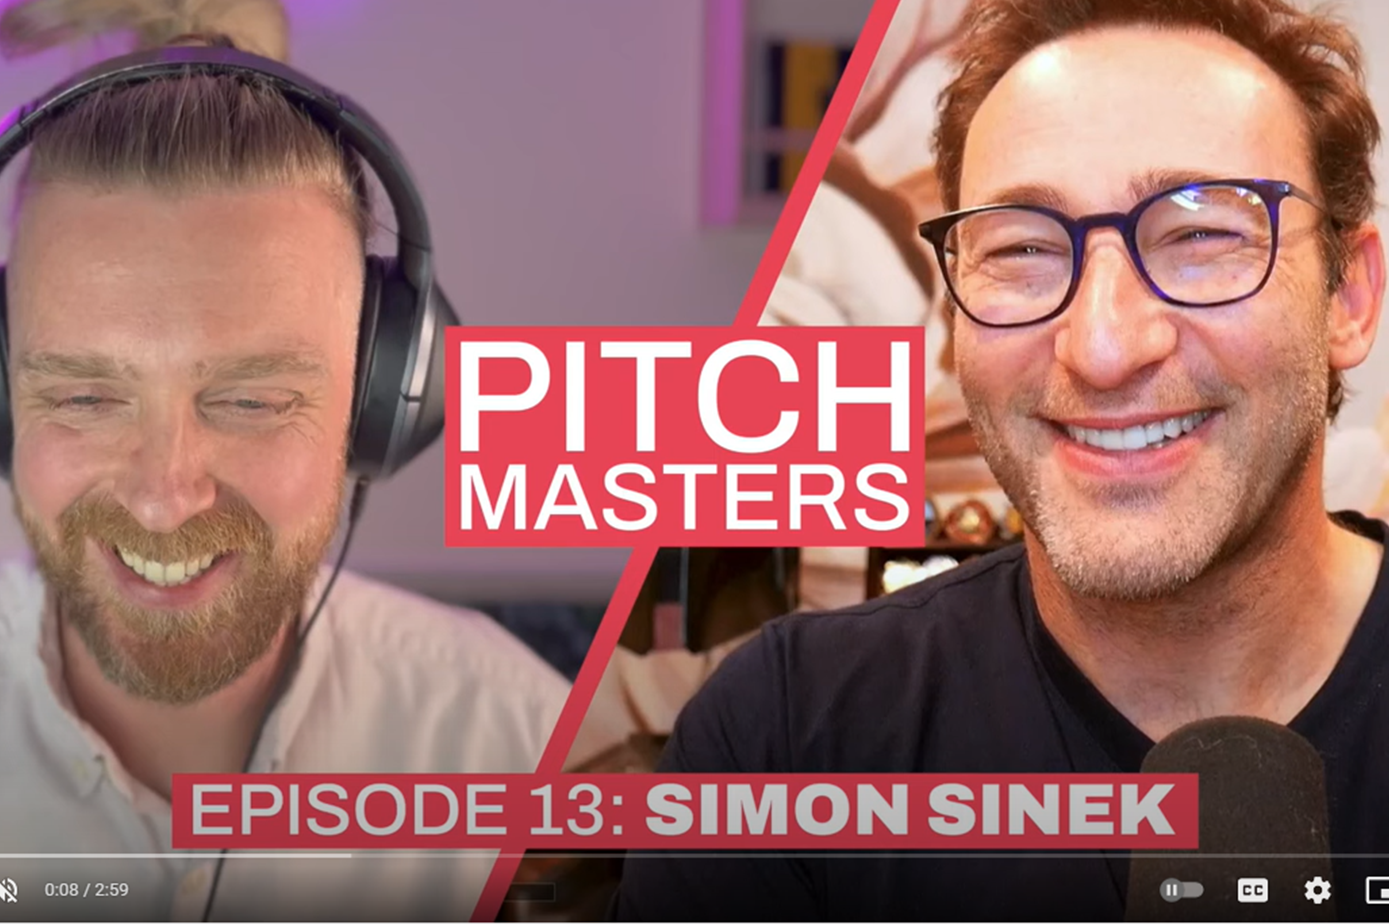 Screenshot of YouTube thumbnail showcasing Simon Sinek and the poscast host